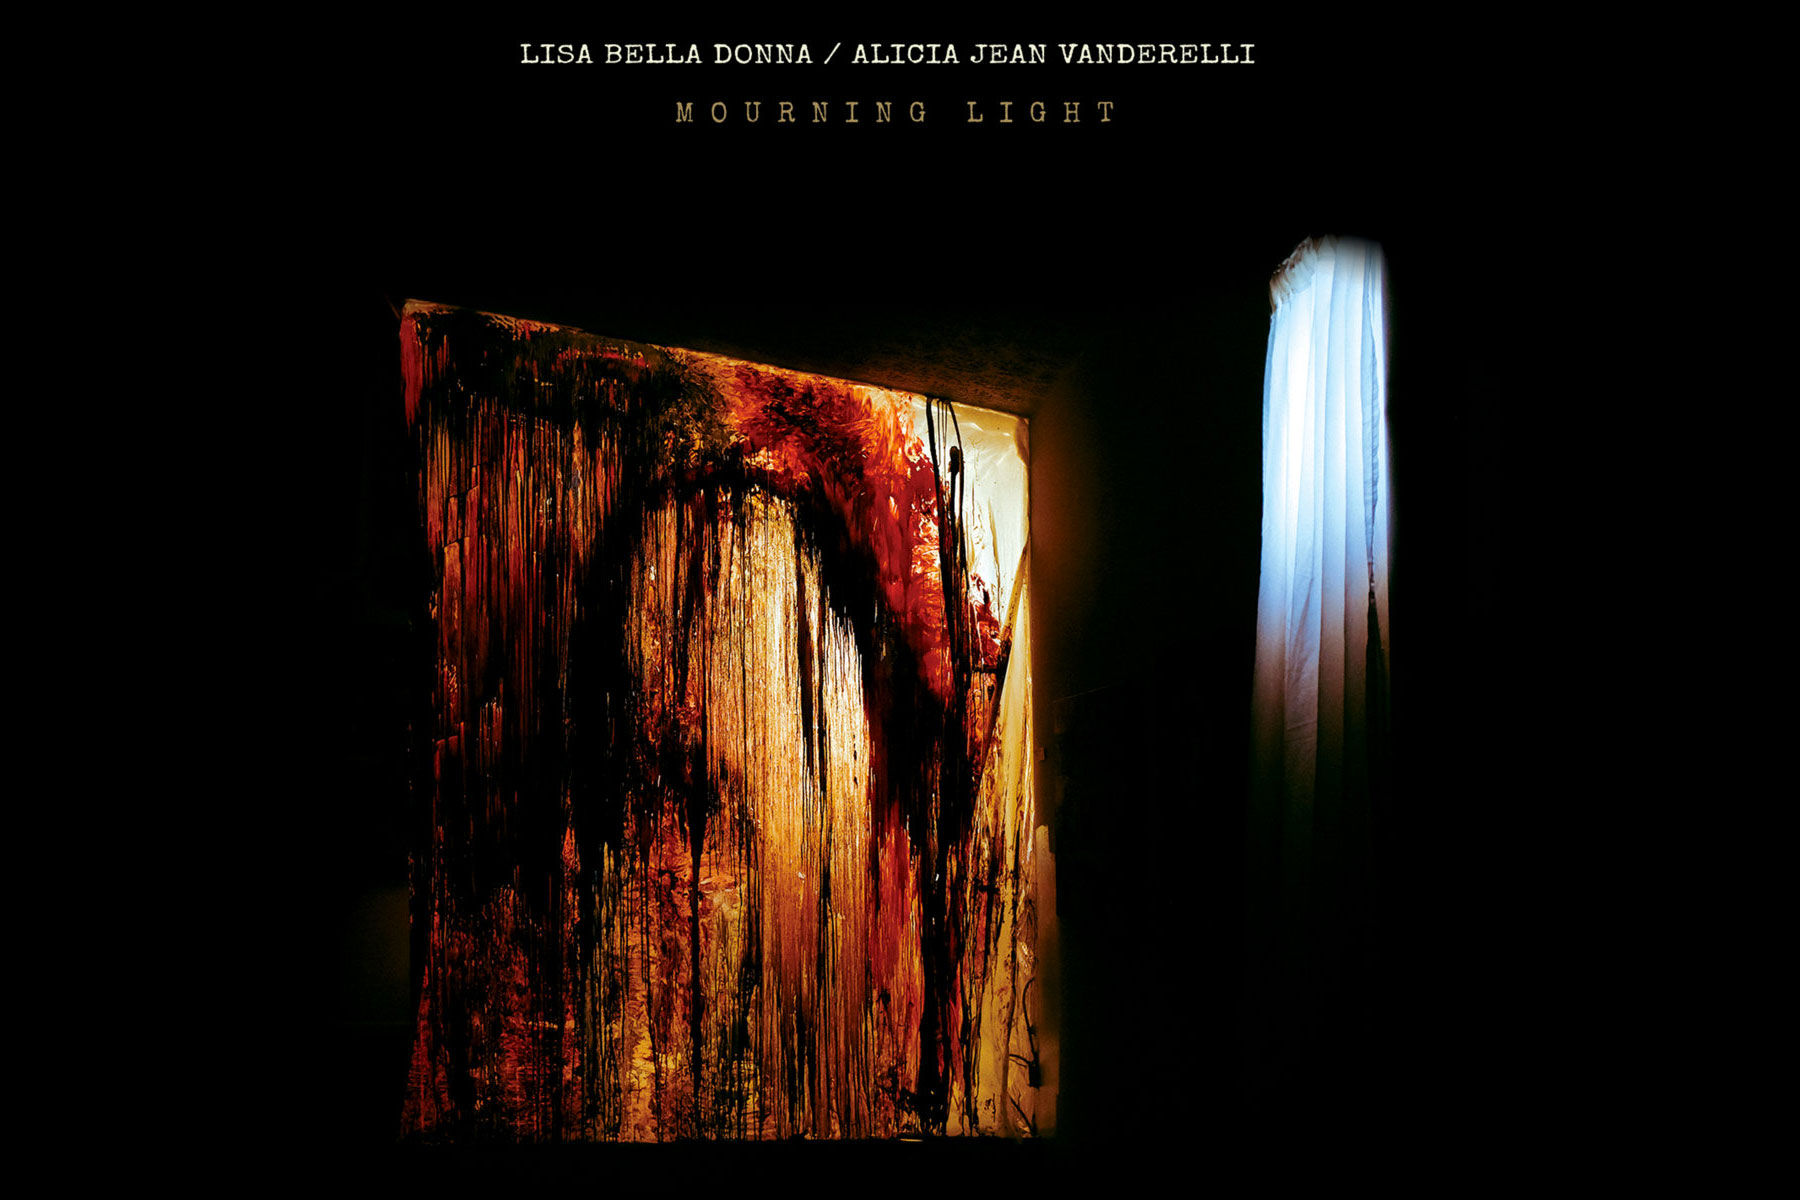 Lisa Bella Donna Mourning Light album art